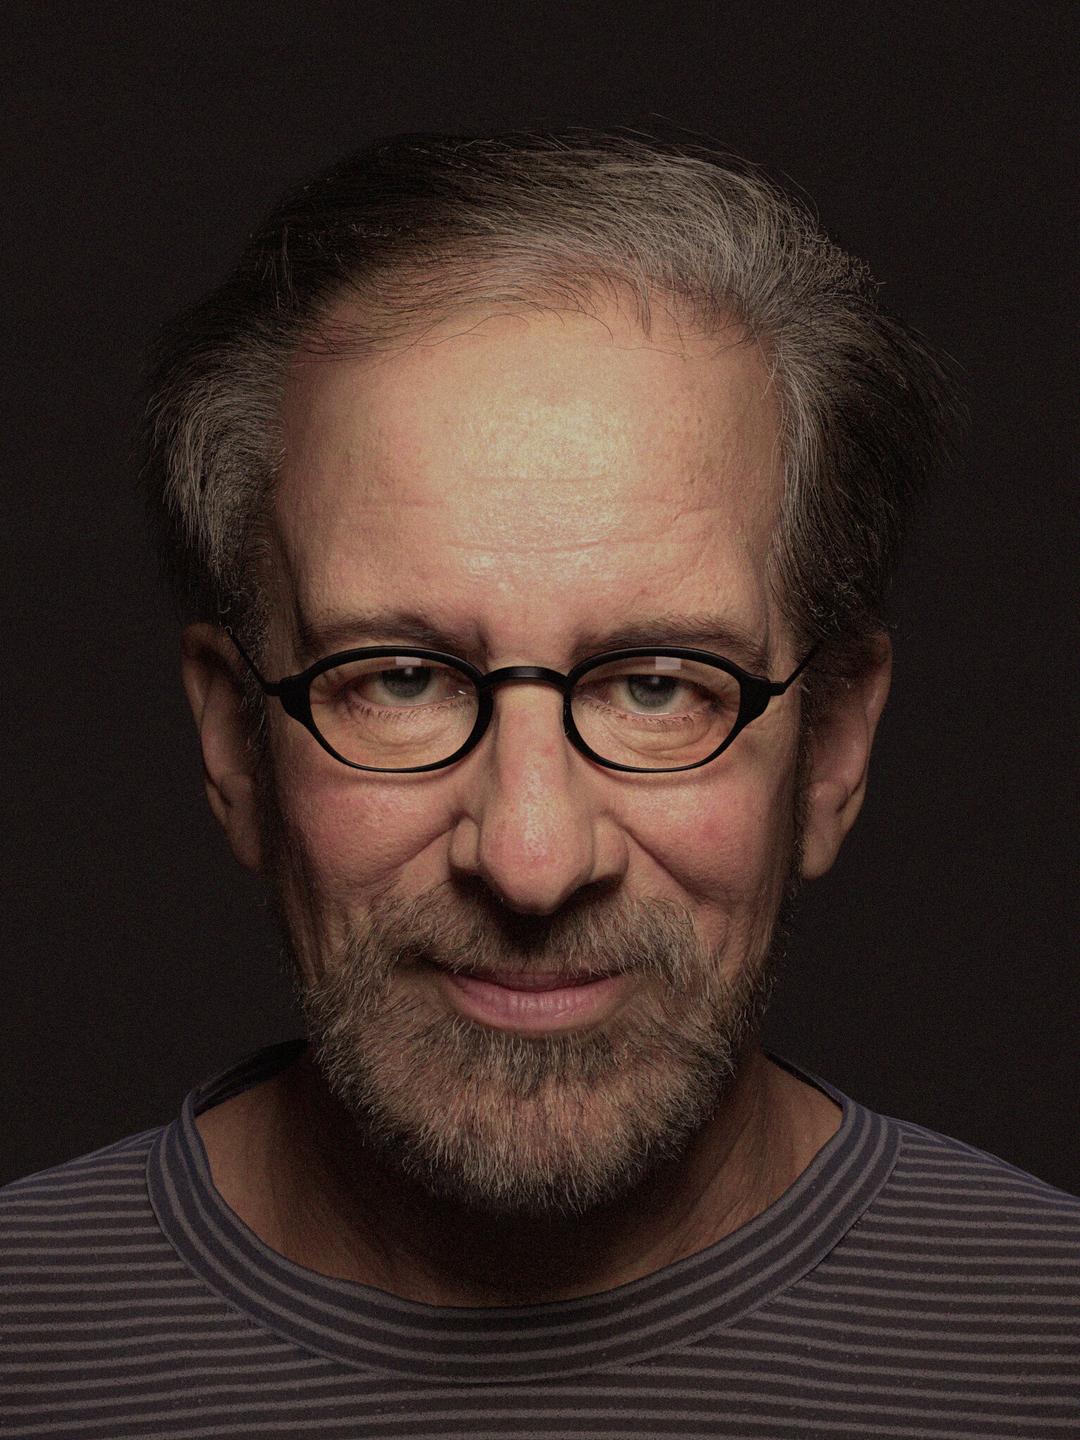 Steven Spielberg love story